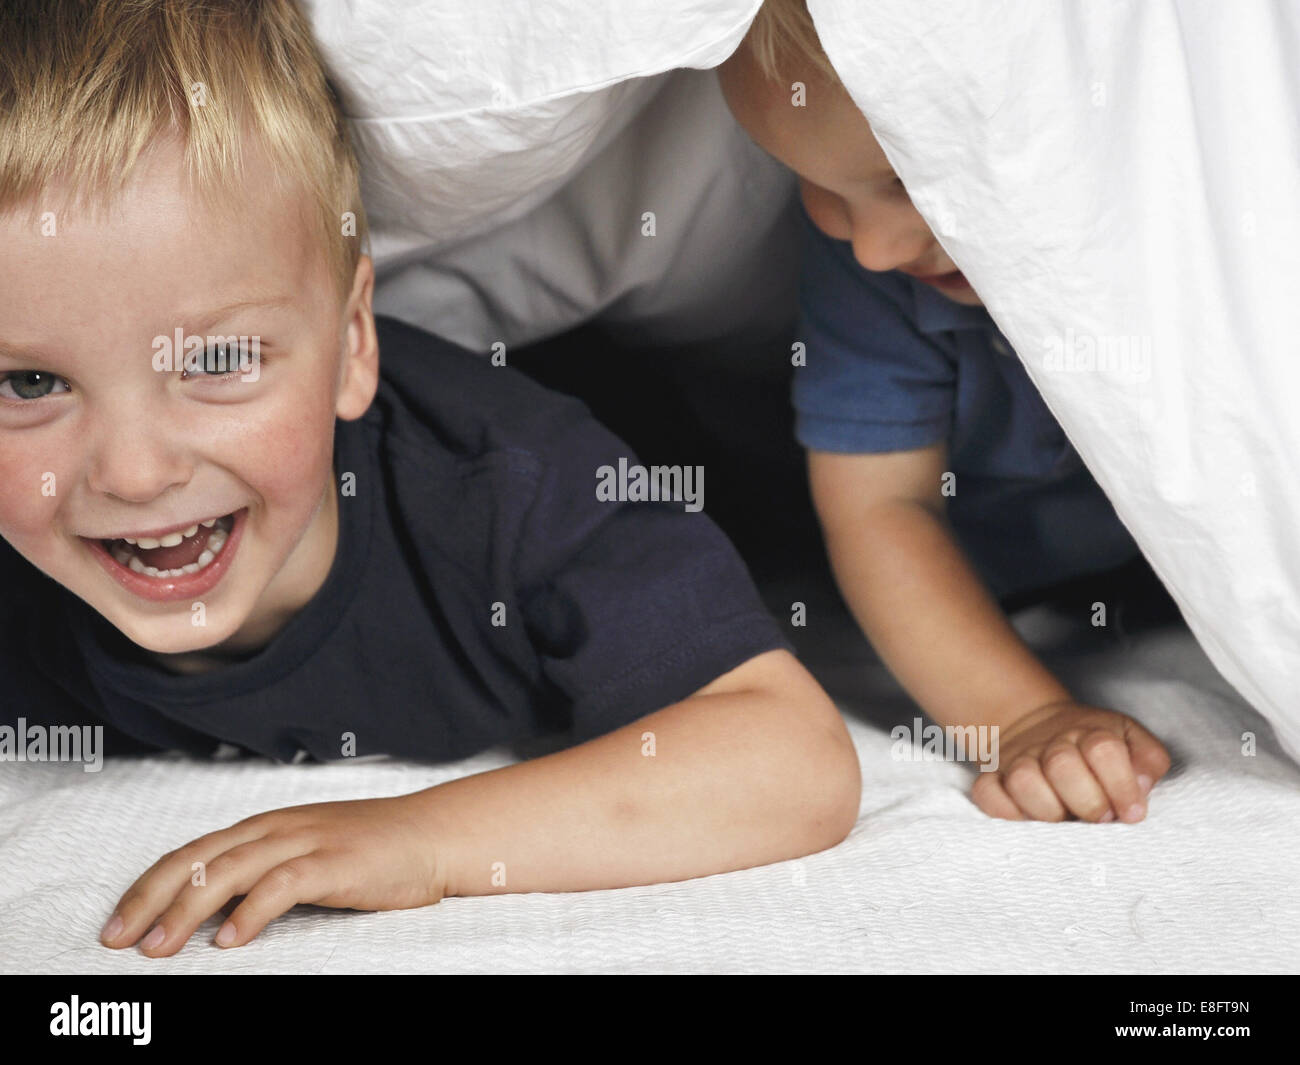 Two boys hiding under a duvet Stock Photo